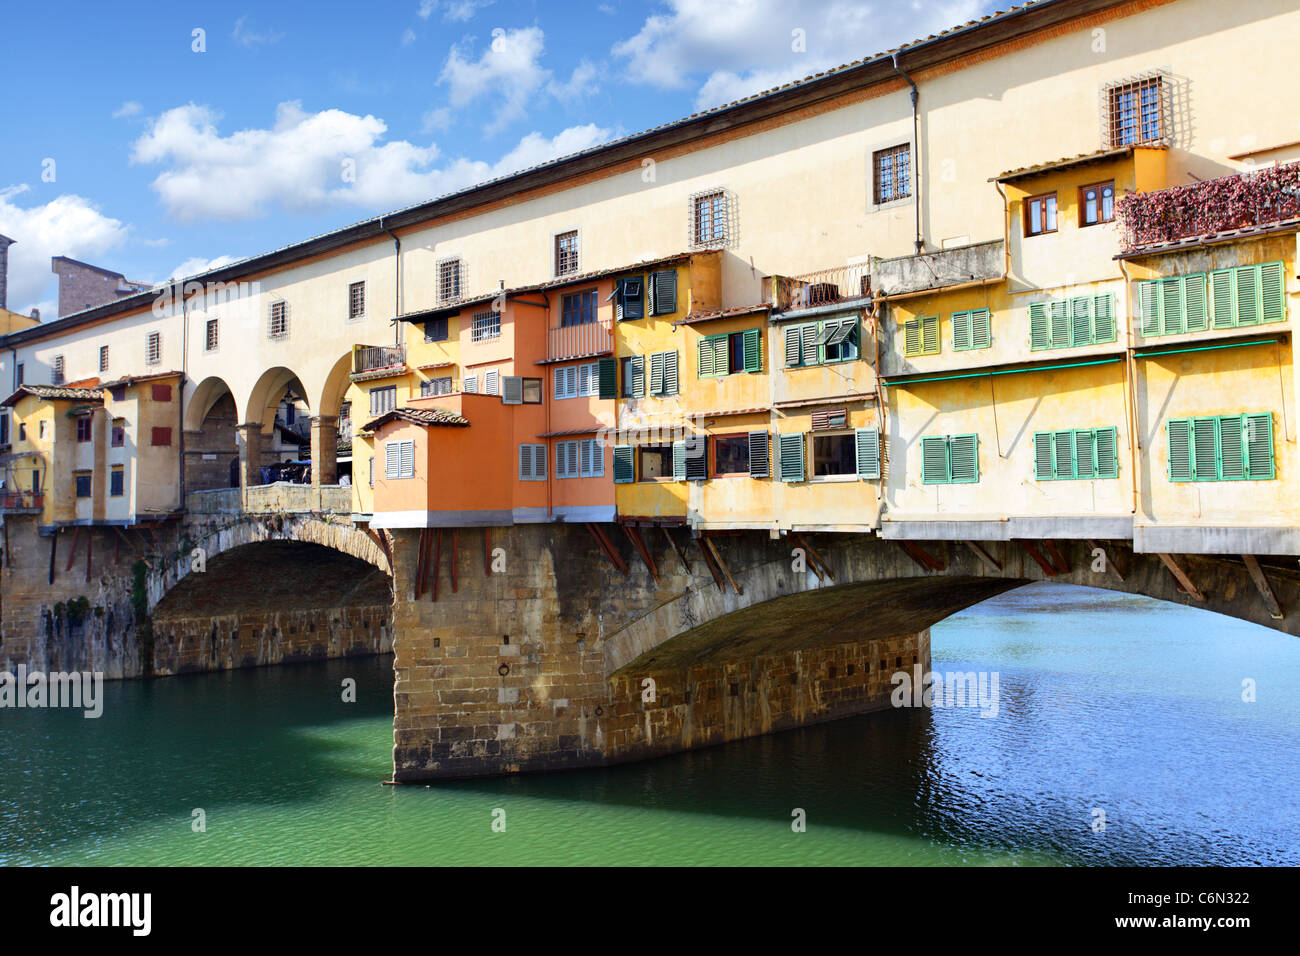 Bridge Ponte Vecchio over Arno river in Florence, Italy Stock Photo